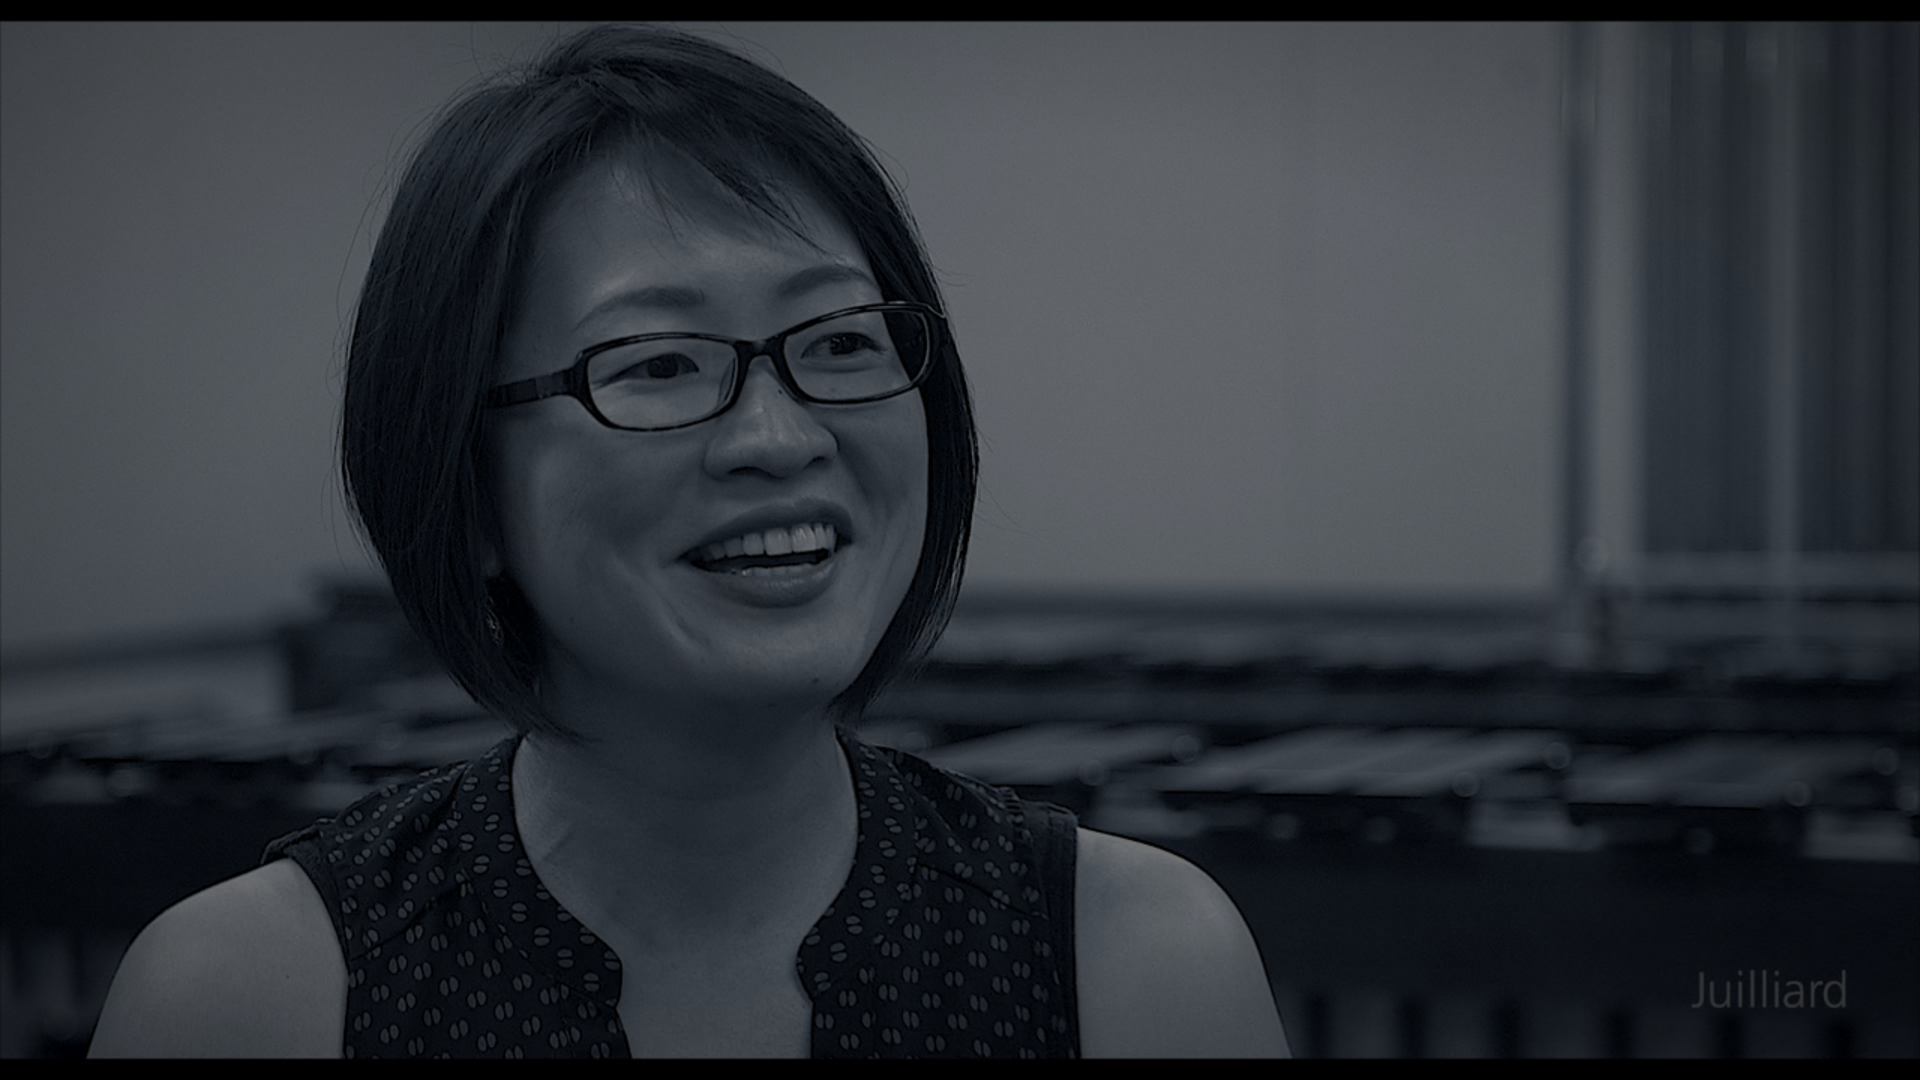 Video feature on Haruka Fujii, Juilliard alumna and internationally renowned percussionist